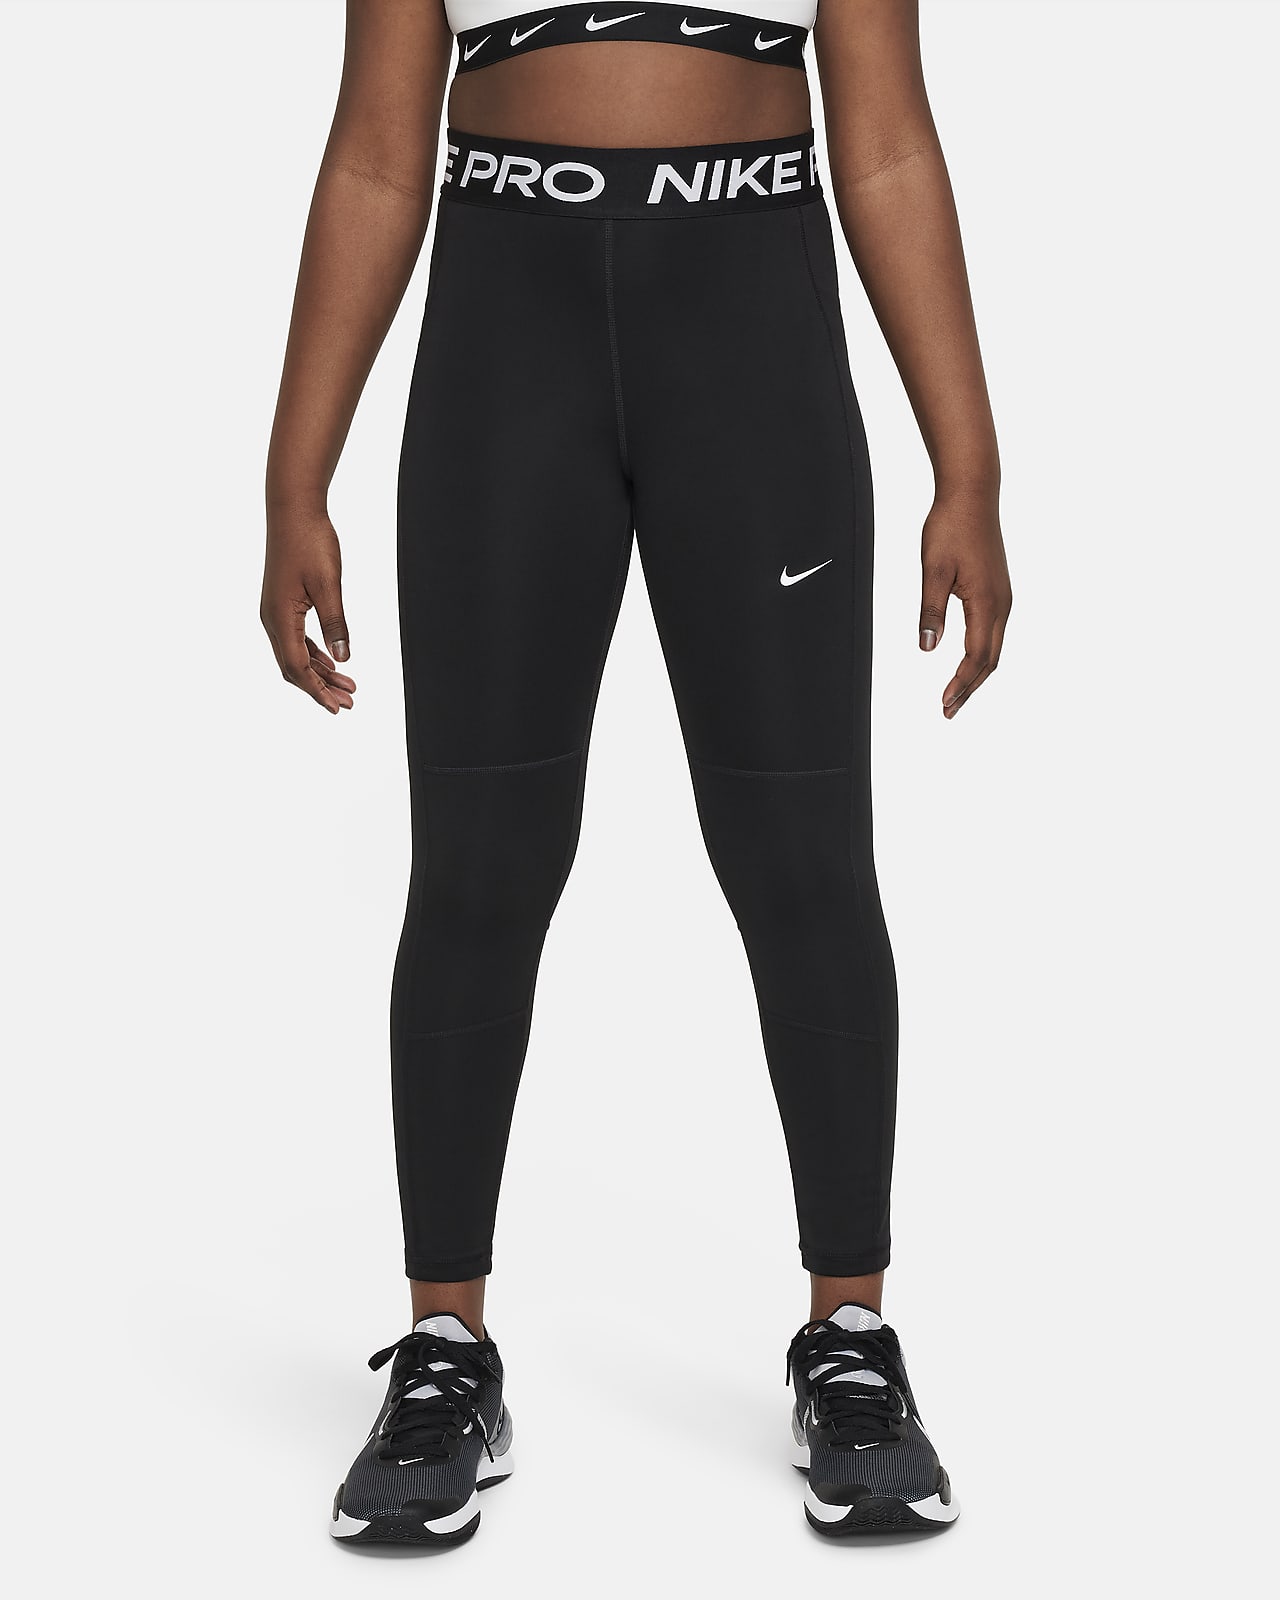 Nike Pro Training Dri-FIT Combat Gear high-waisted legging shorts